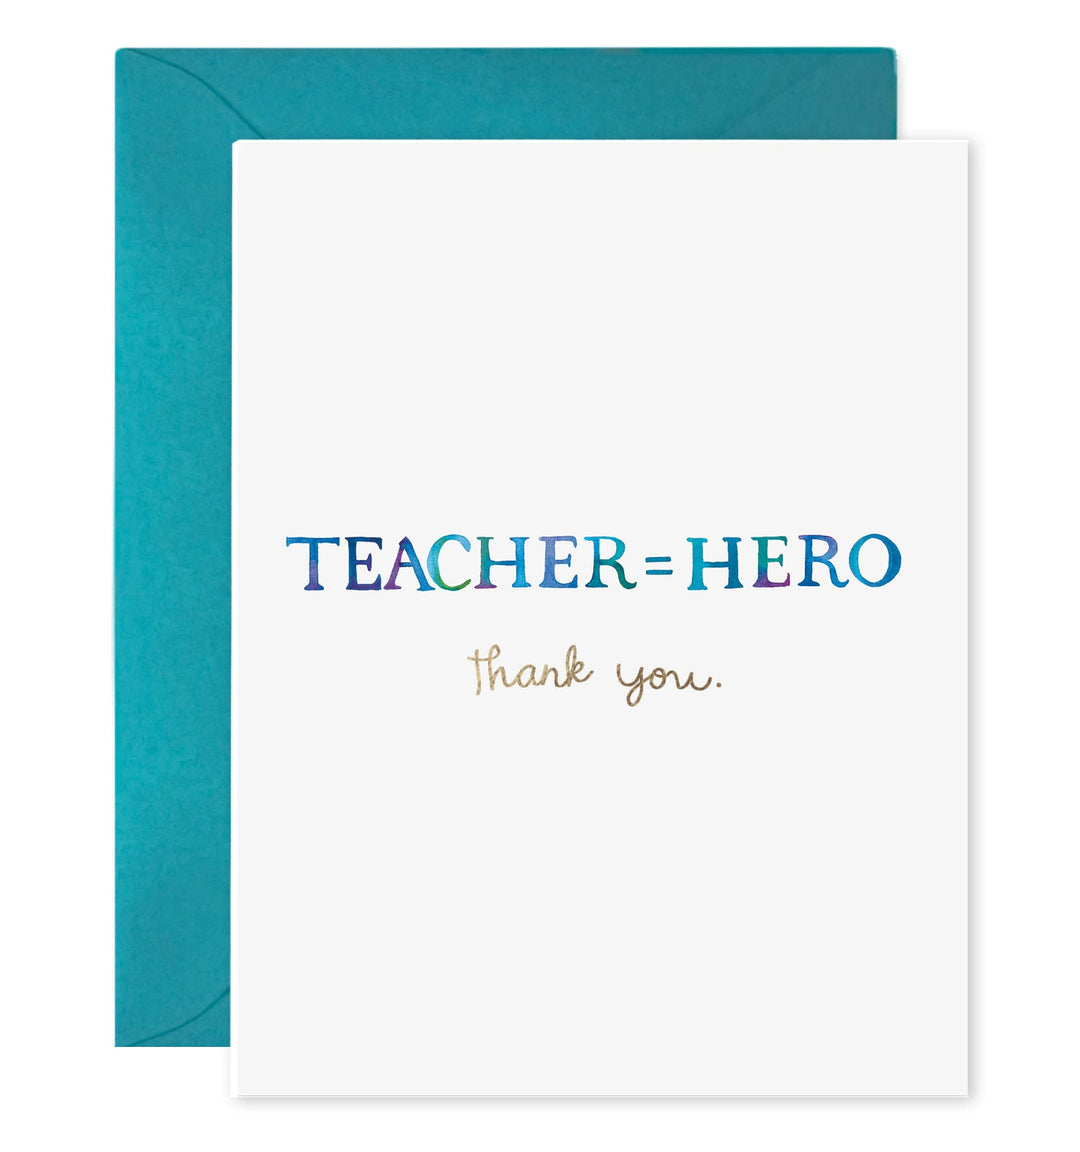 Teacher = Hero Card